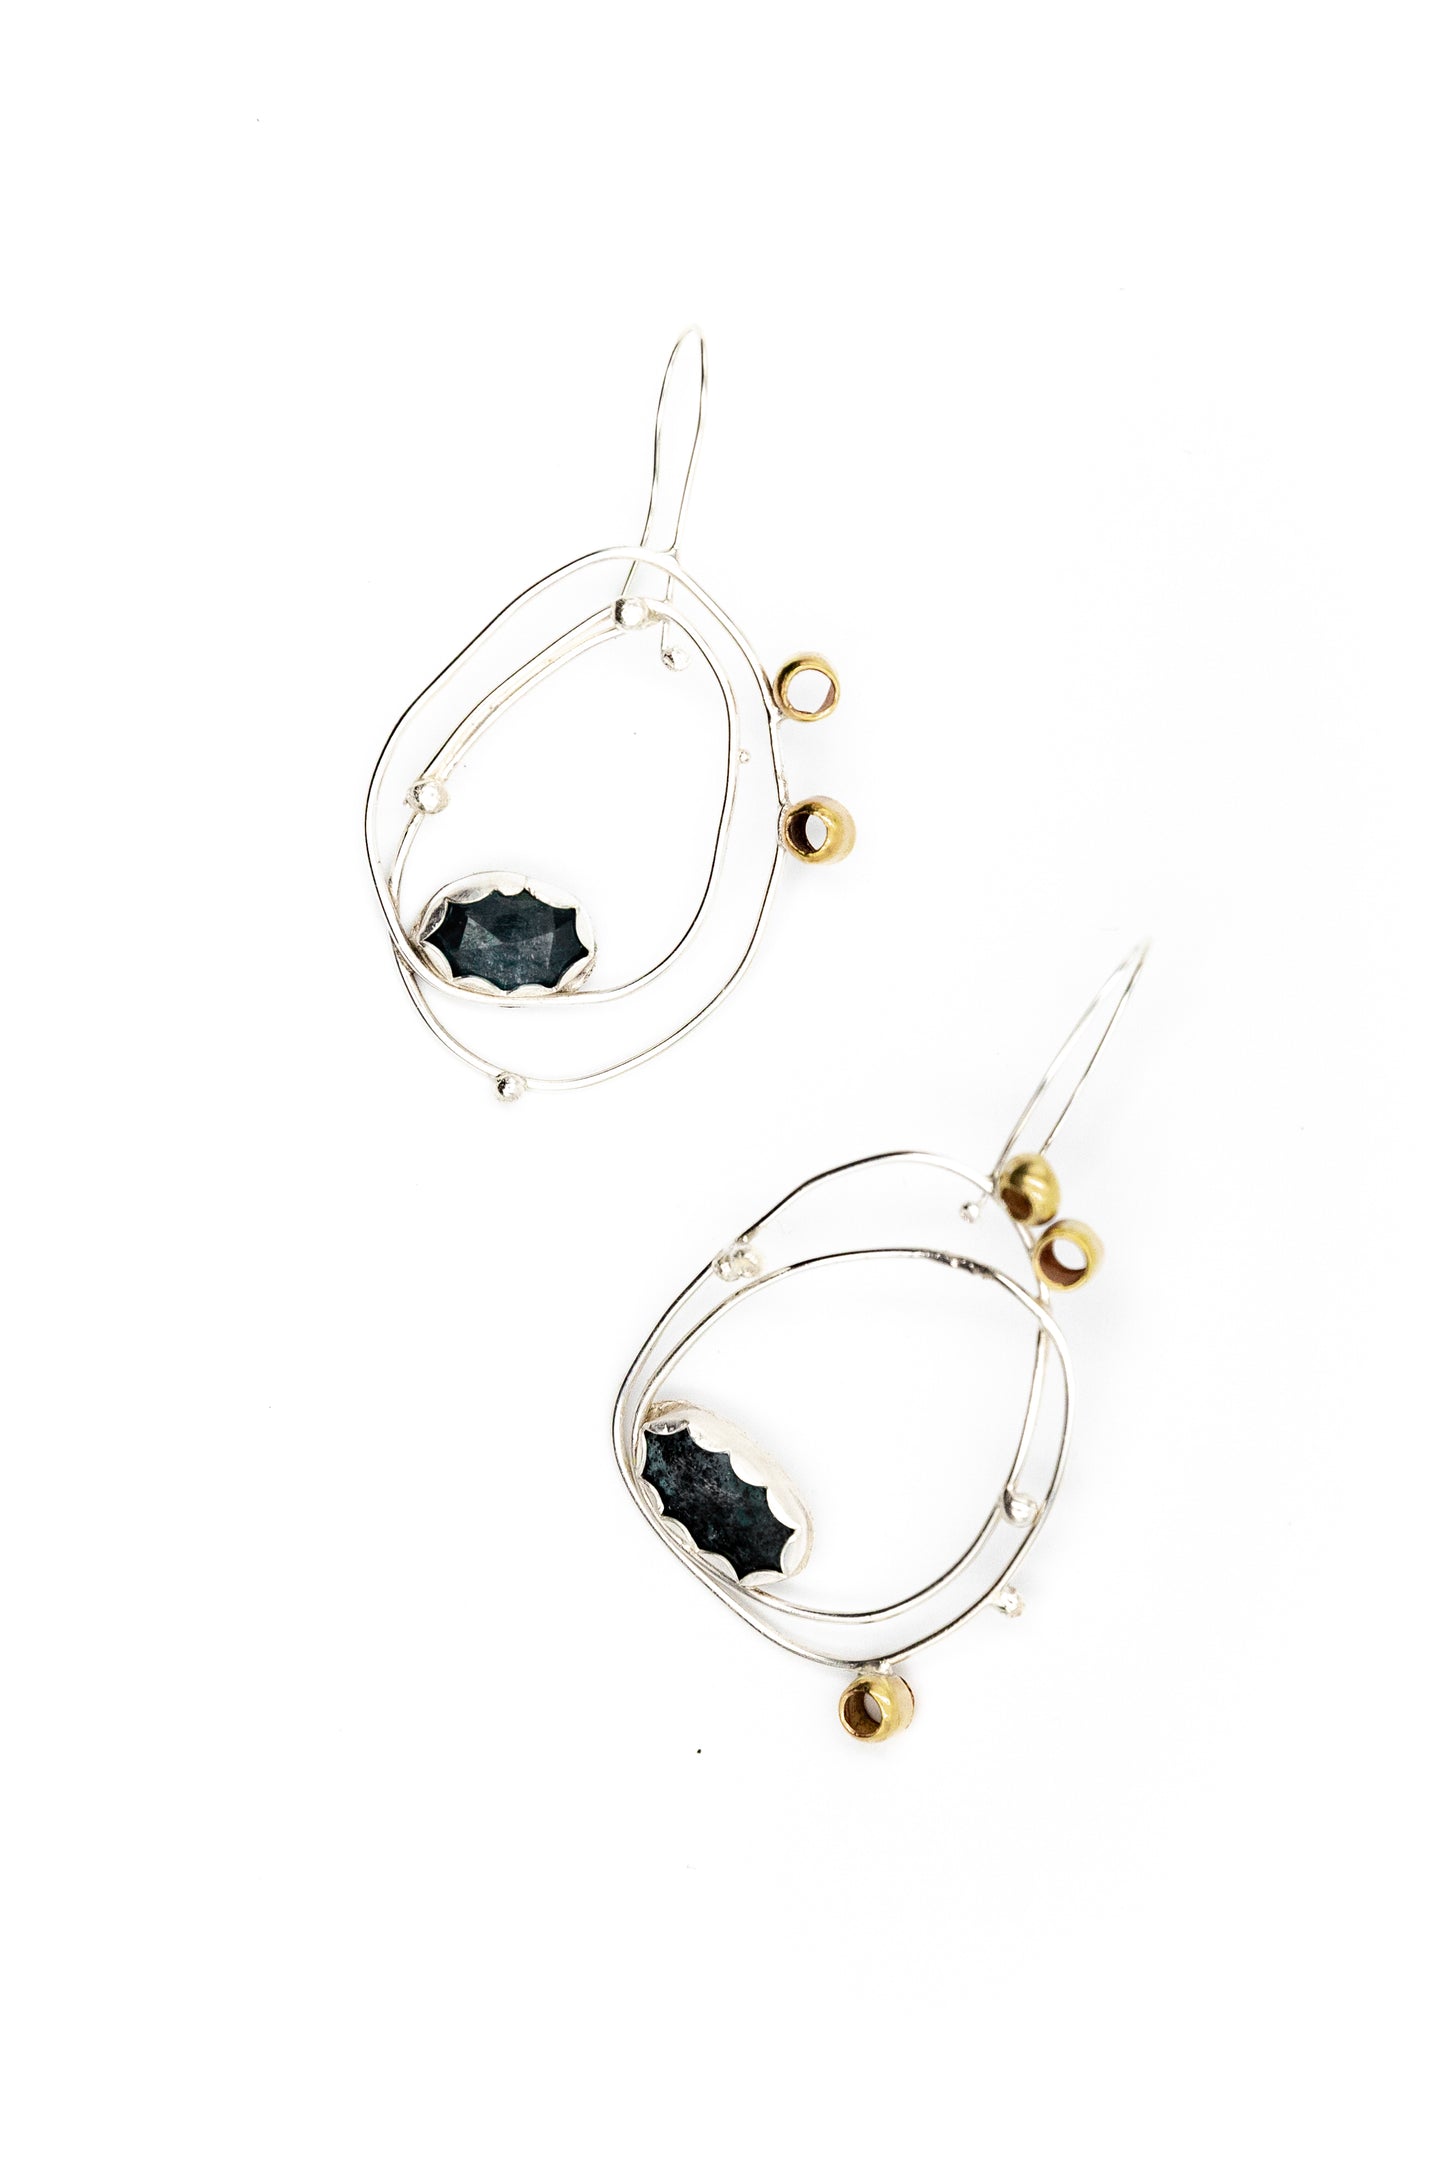 indigo kyanite earrings in silver with brass details